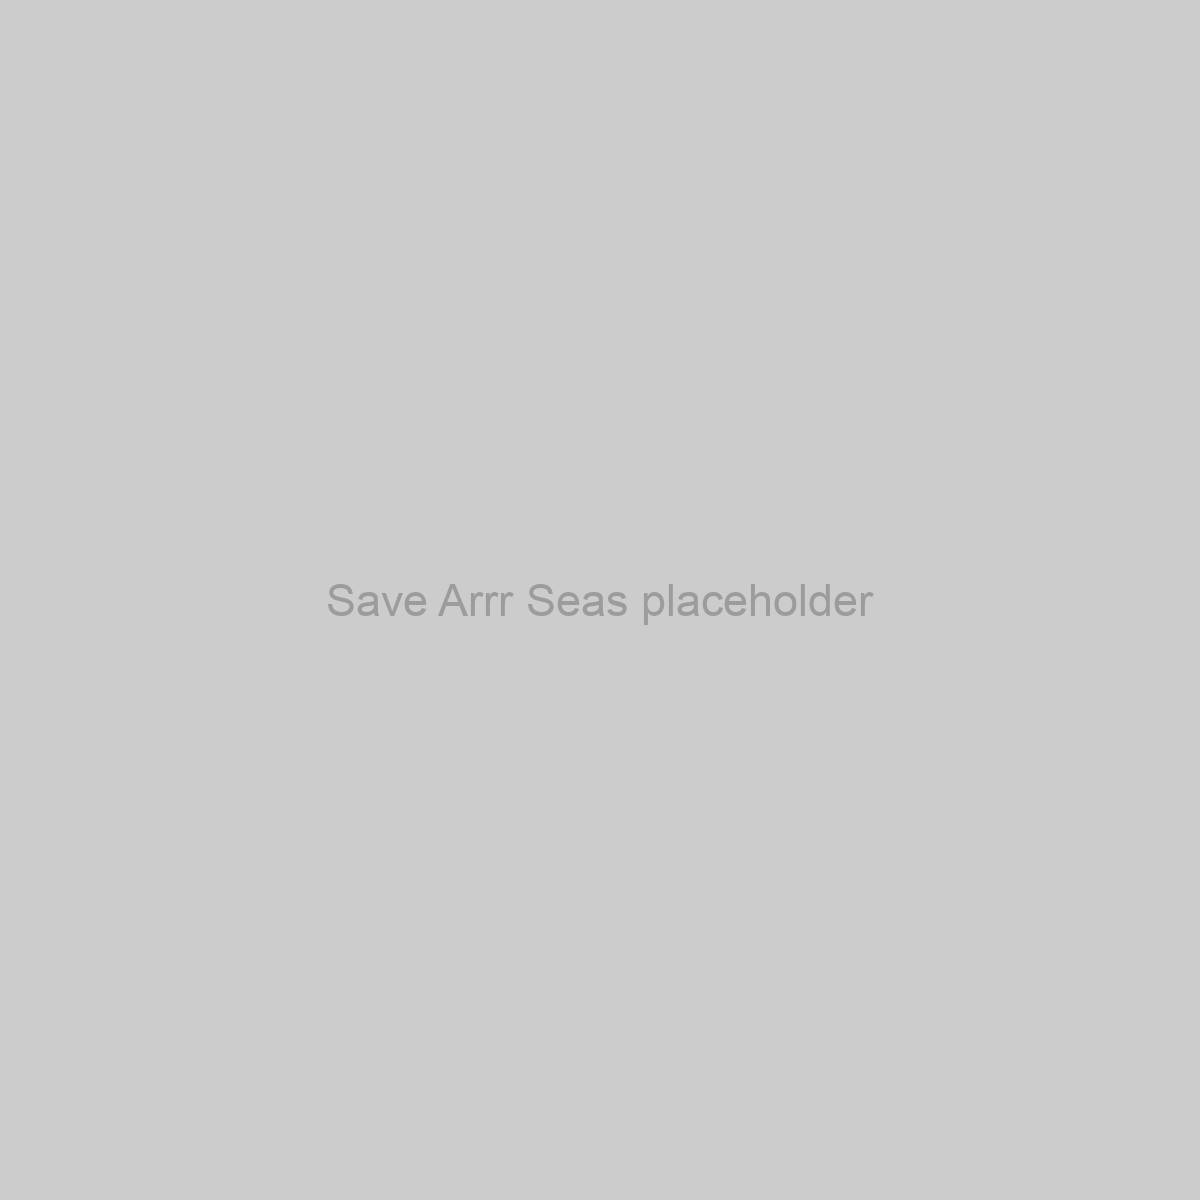 Save Arrr Seas Placeholder Image